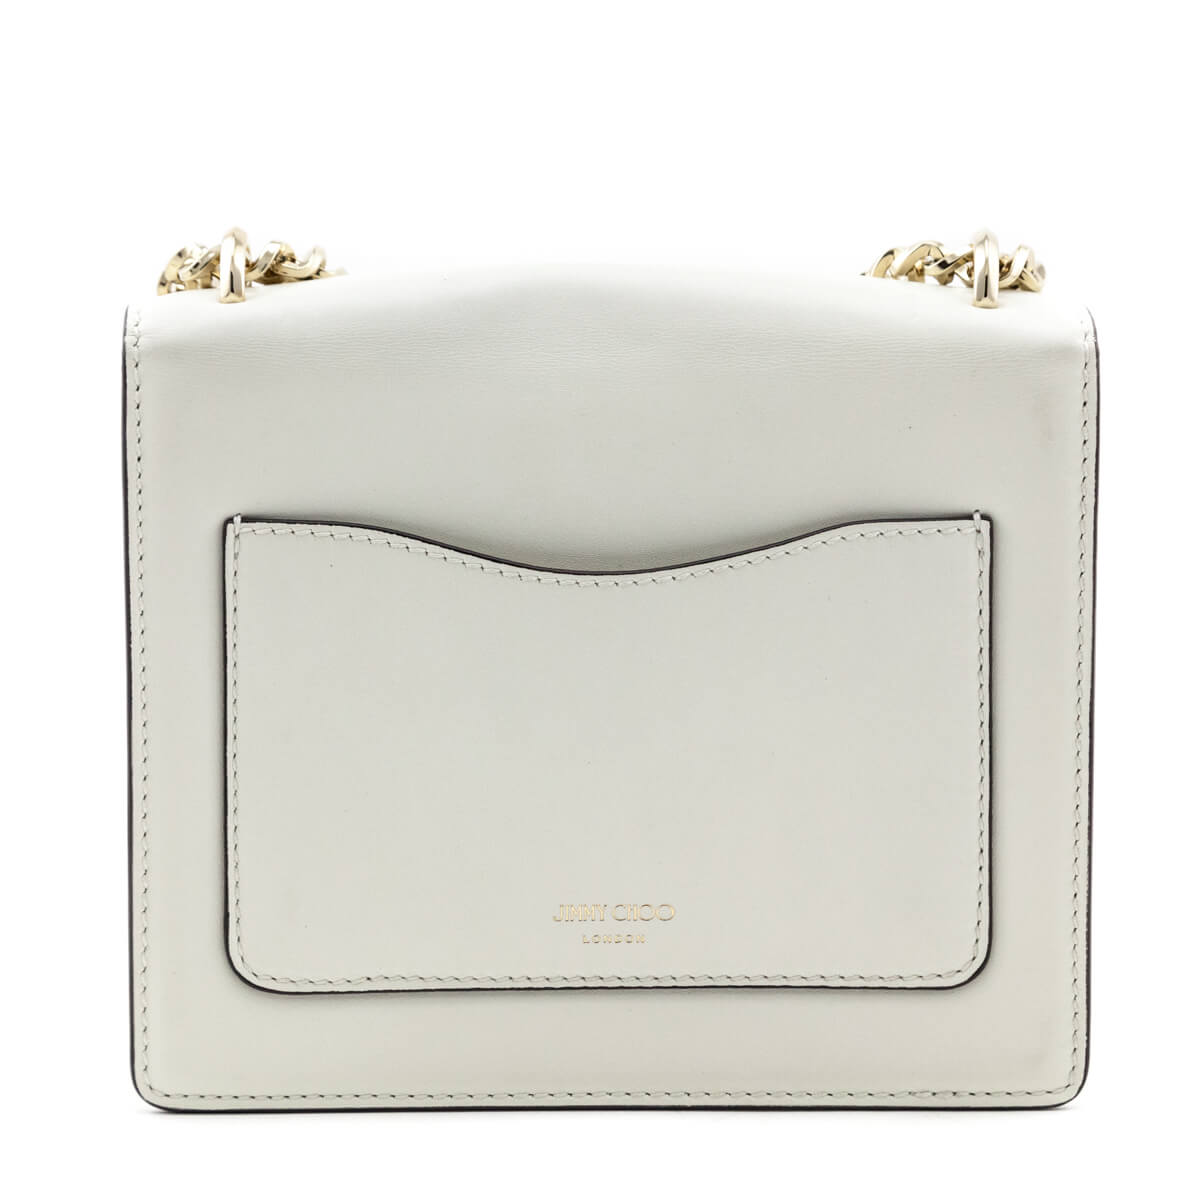 Jimmy Choo Latte White Calfskin Avenue Quad Shoulder Bag - Love that Bag etc - Preowned Authentic Designer Handbags & Preloved Fashions